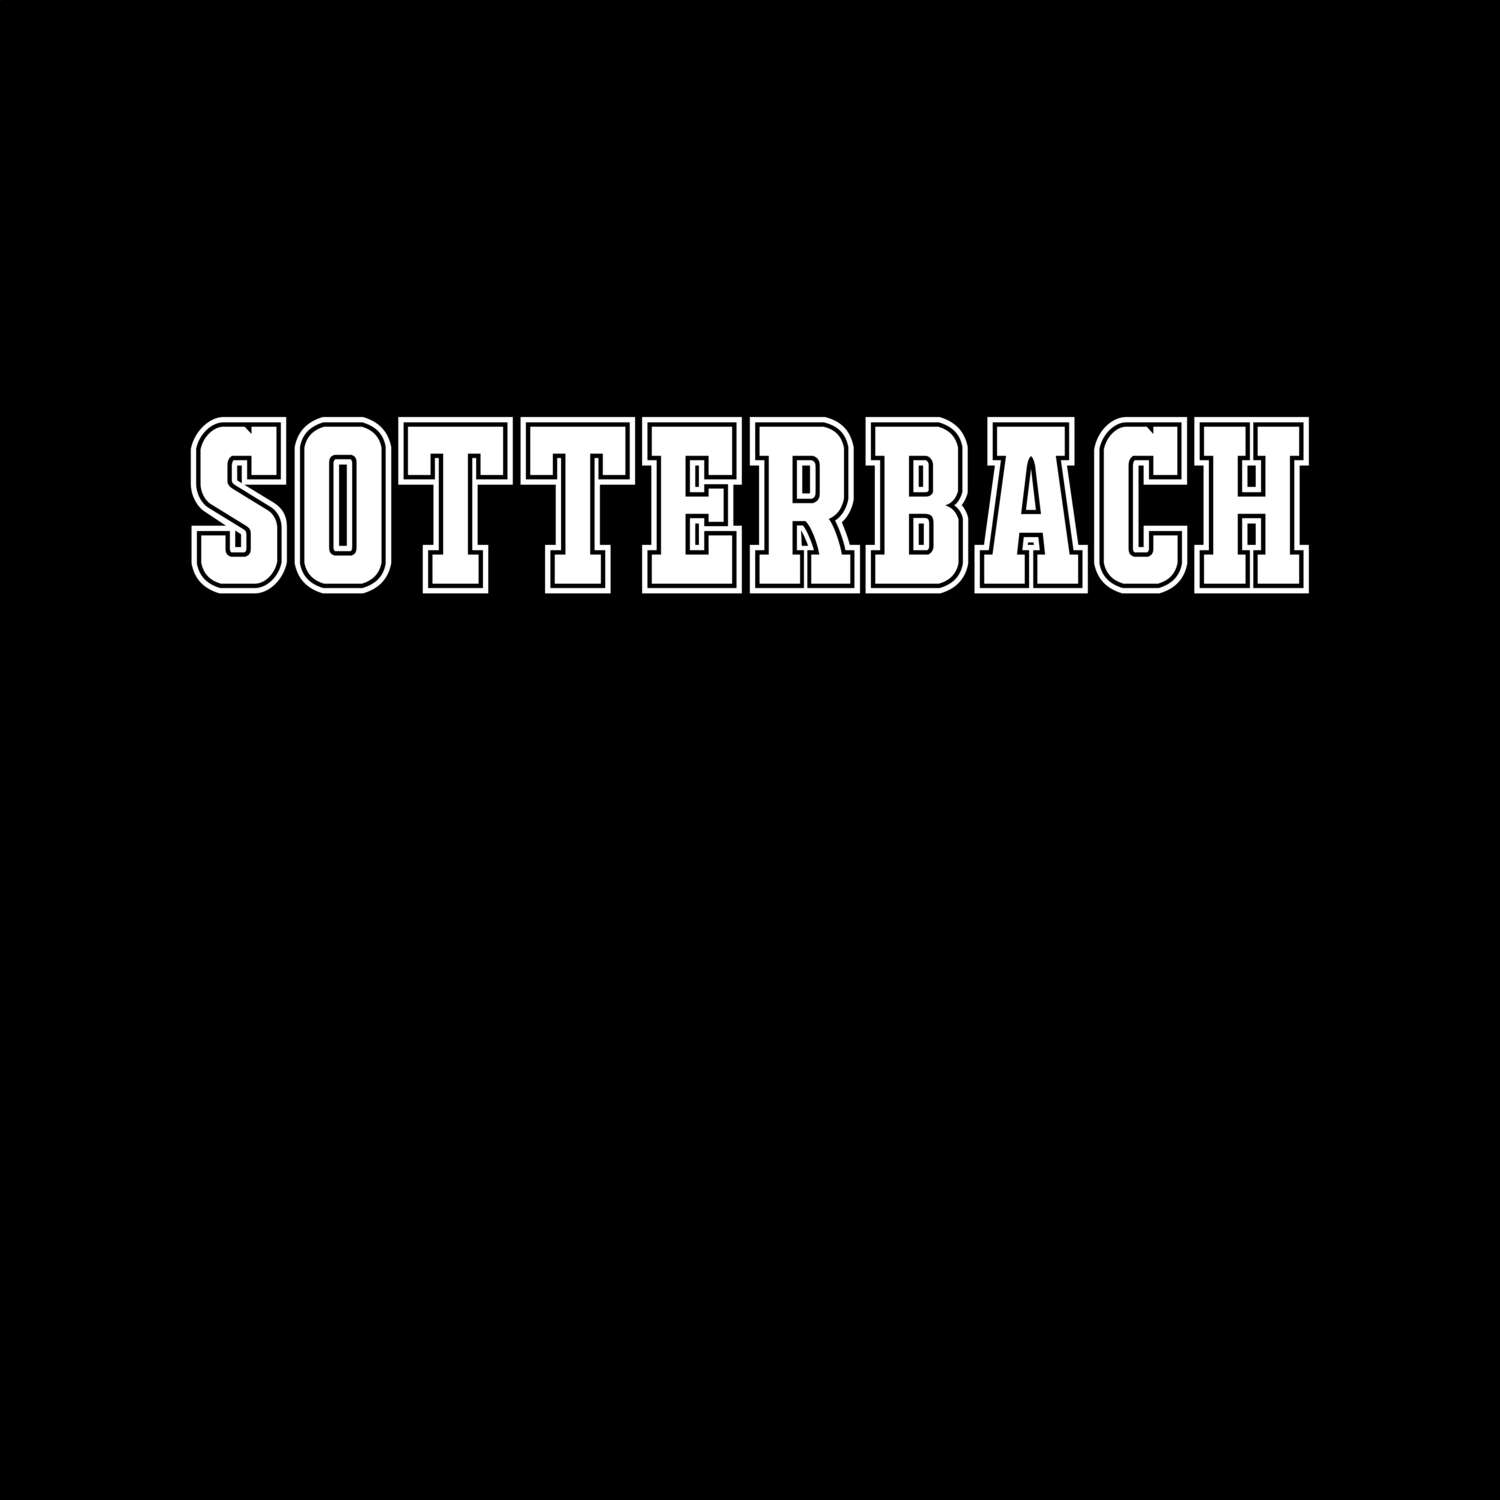 Sotterbach T-Shirt »Classic«